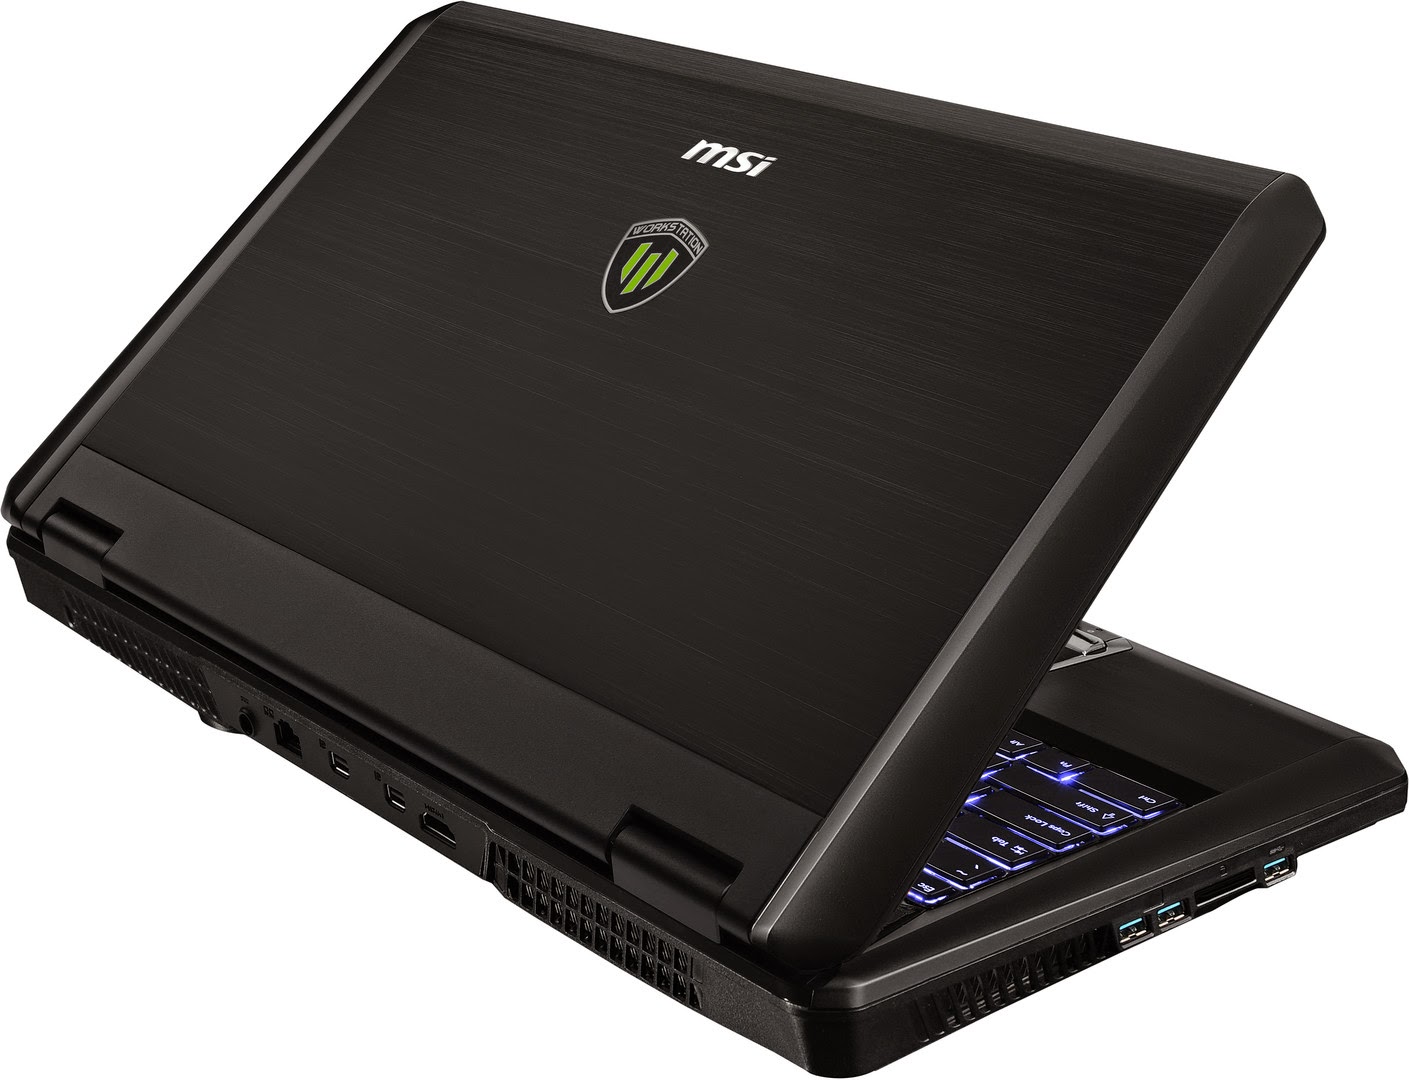 Harga Laptop Terbaru MSI Desember 2014